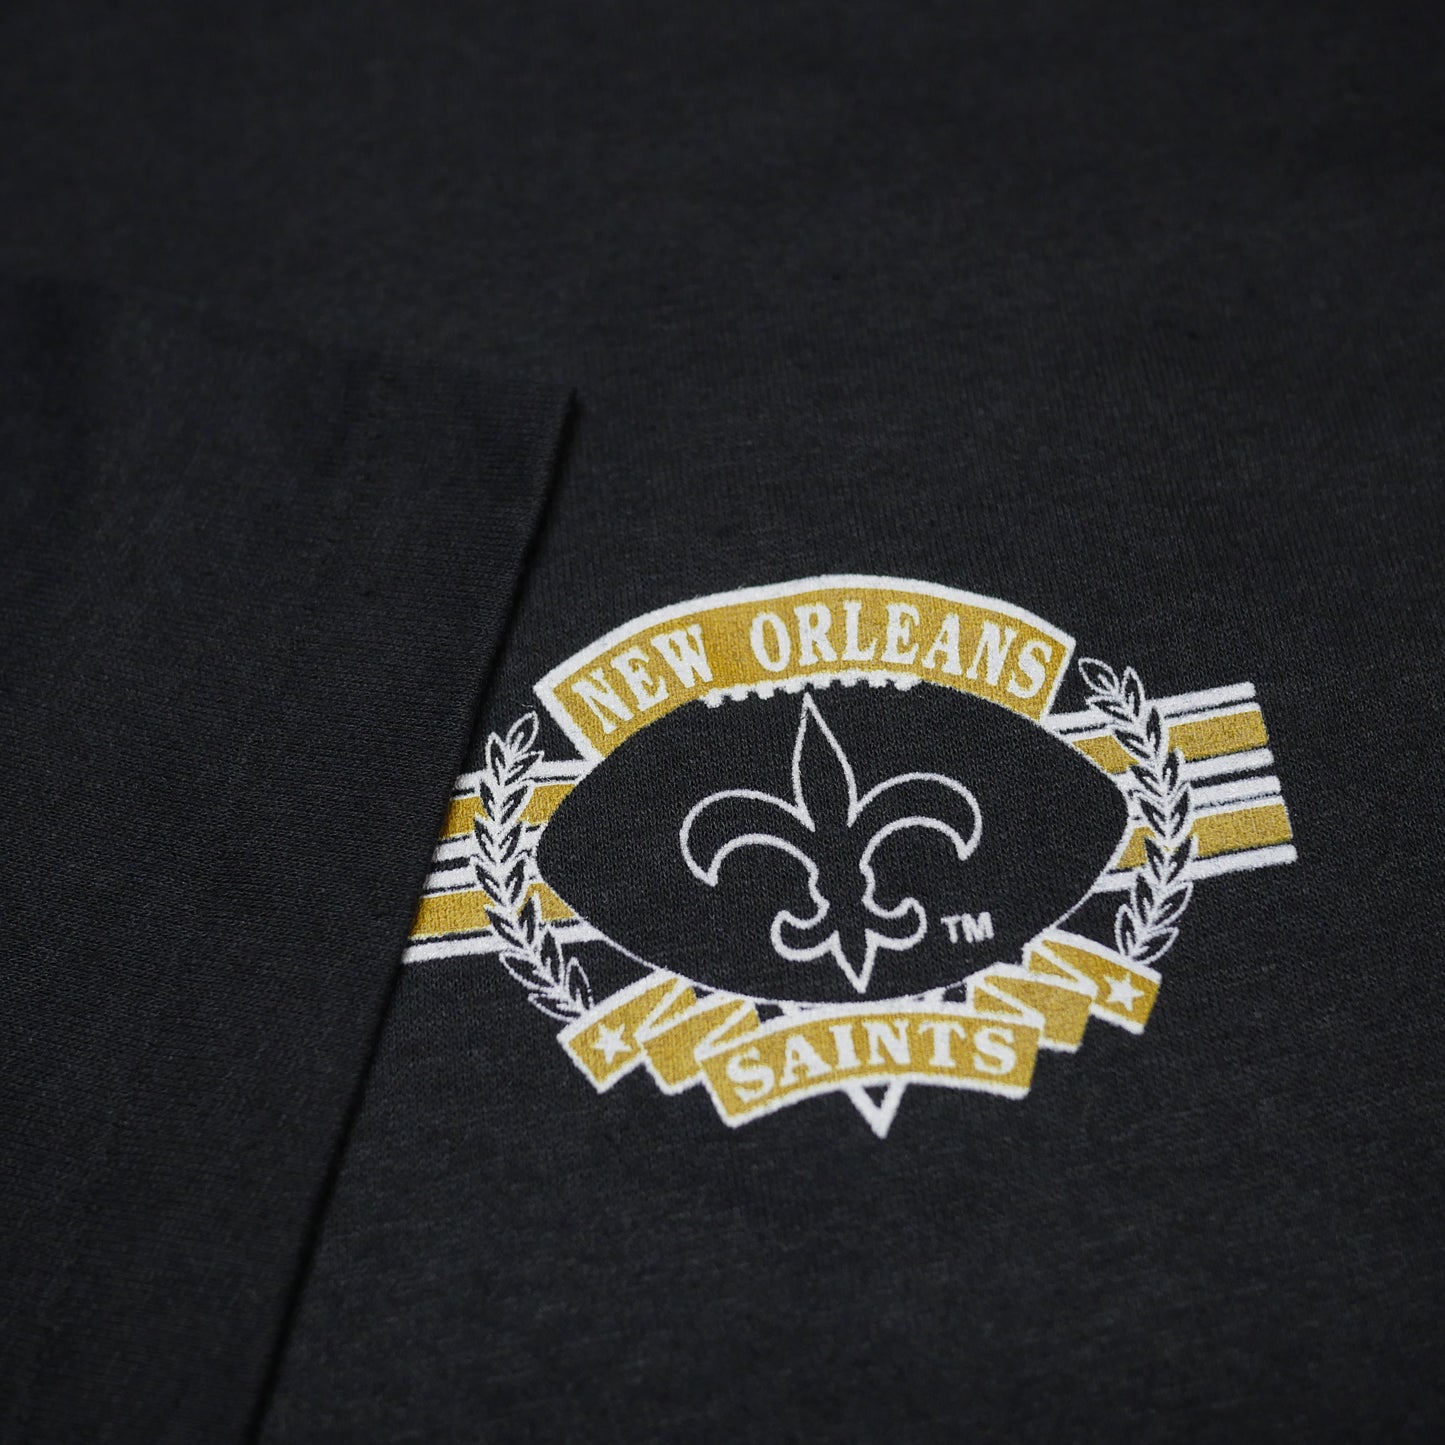 New Orleans Saints Shirt - XL